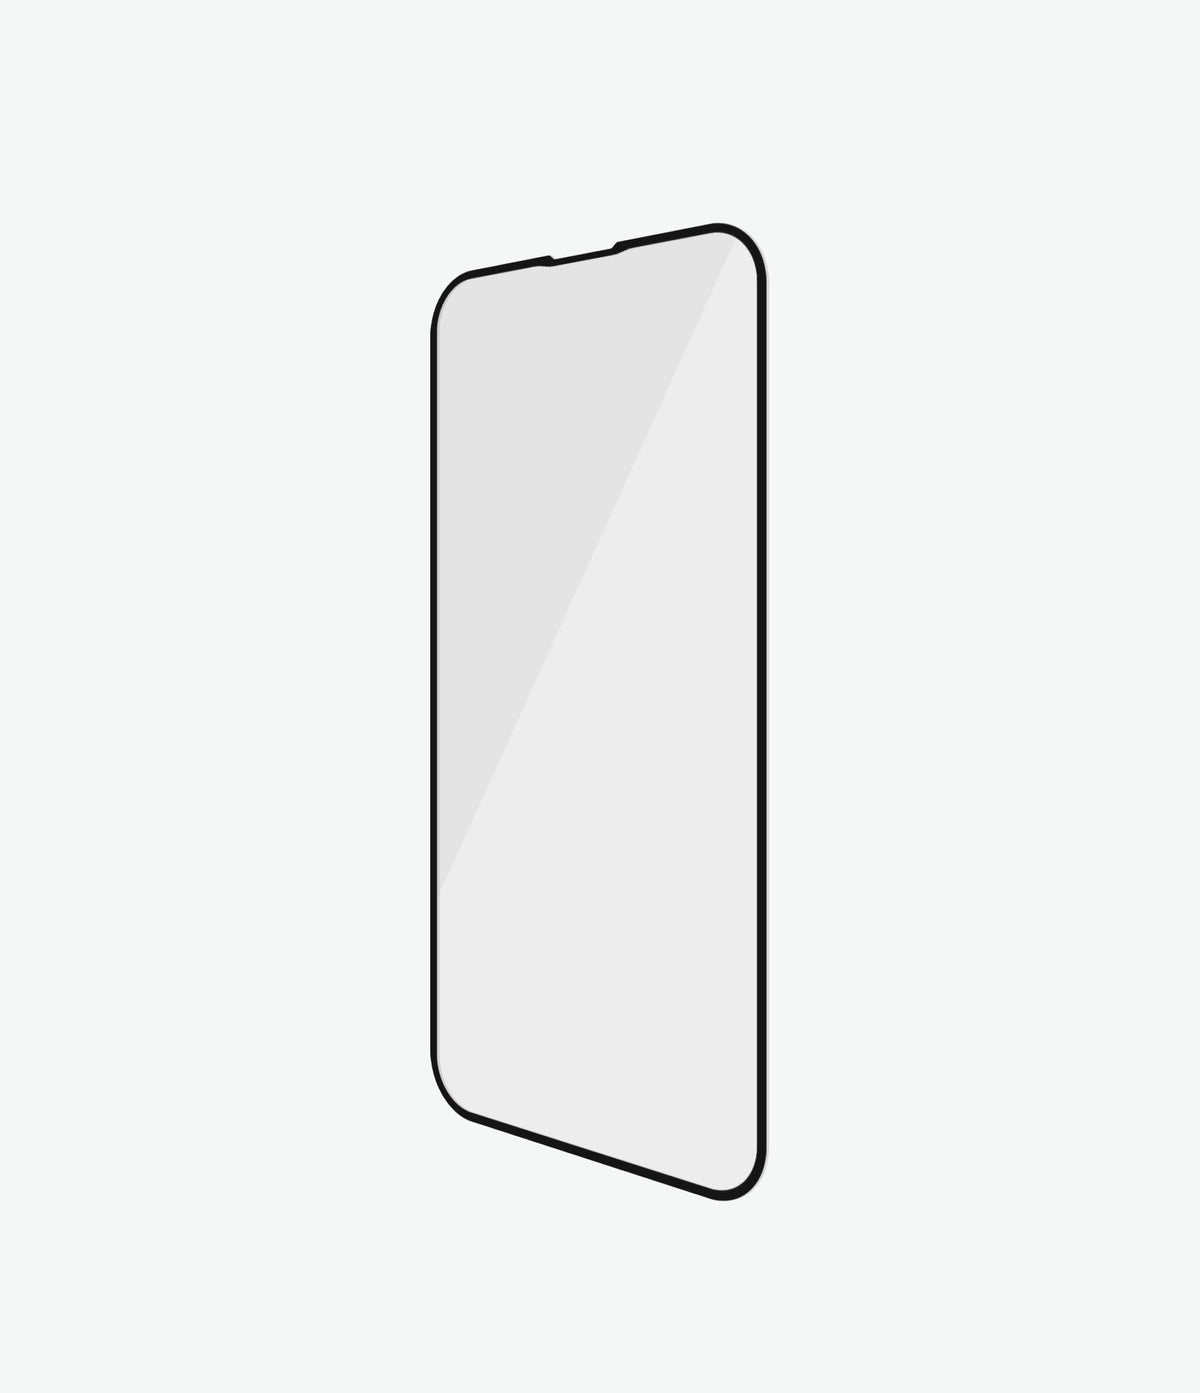 [OPEN BOX] PANZERGLASS iPhone 13 Pro Max - Edge-to-Edge Black Frame w/ Anti-Microbial Screen Protector - Clear